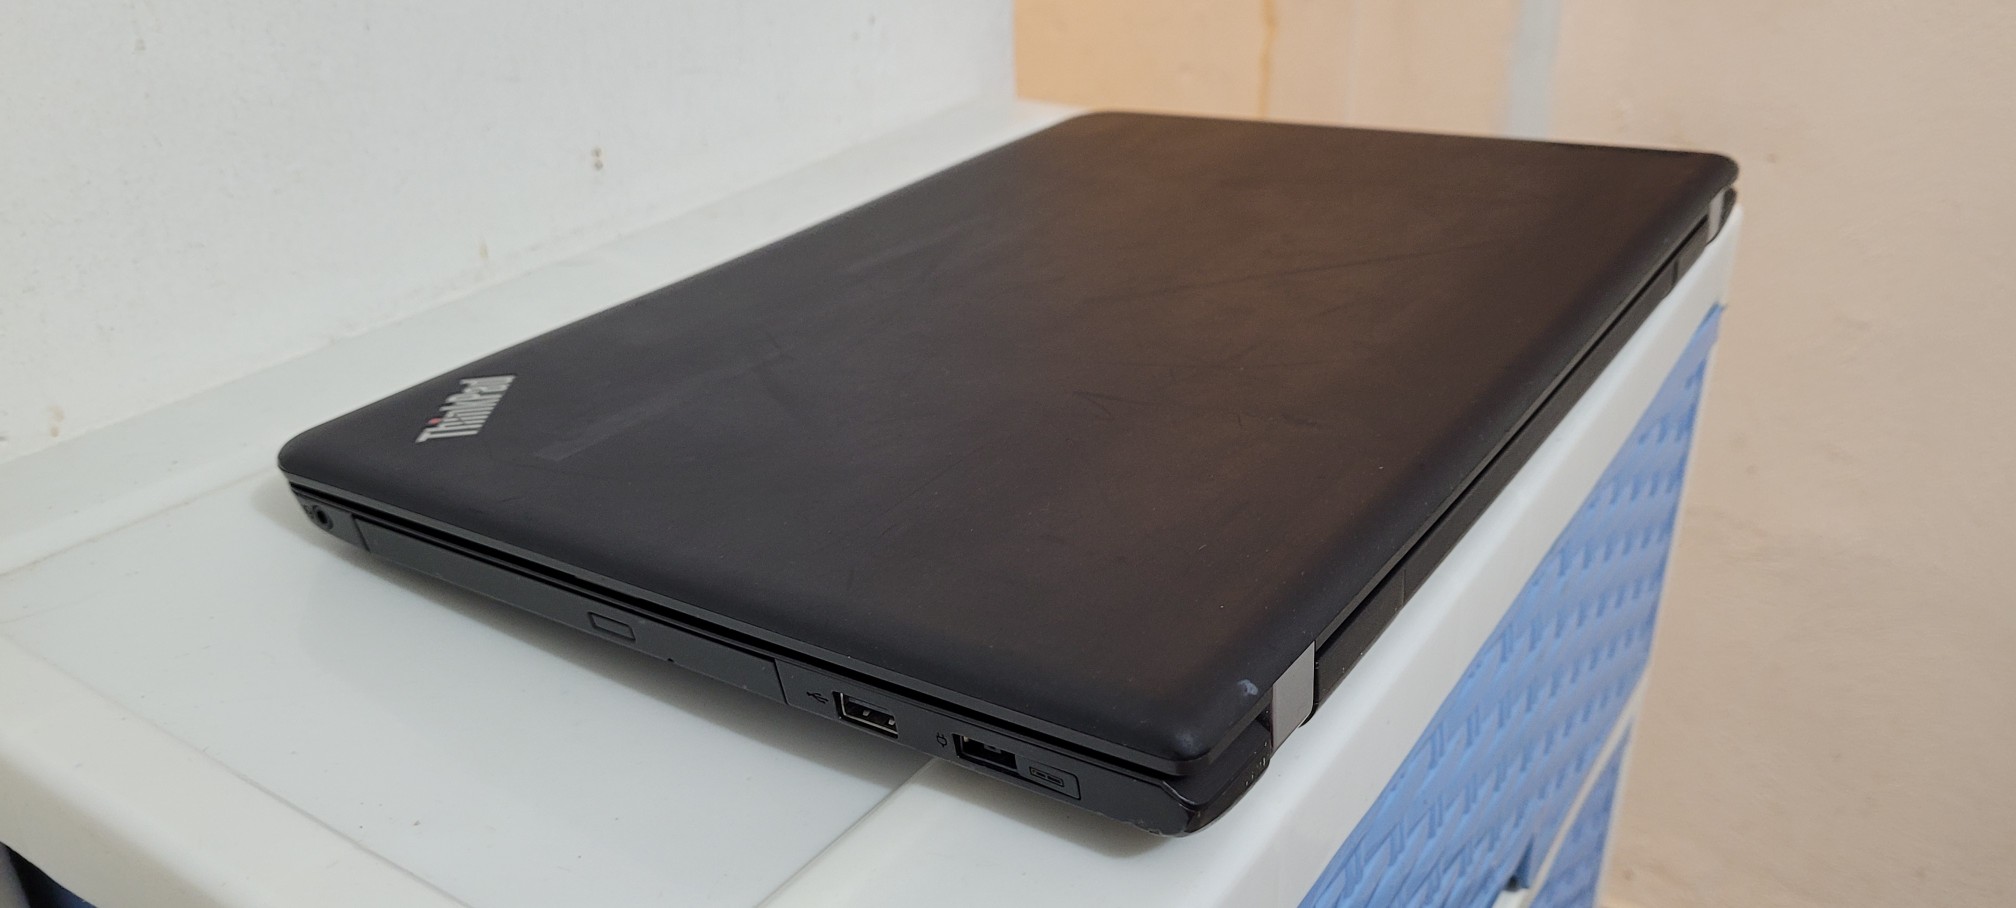 computadoras y laptops - laptop lenovo T450 14 Pulg Core i5 Ram 16gb Disco SSD Video 8gb 2